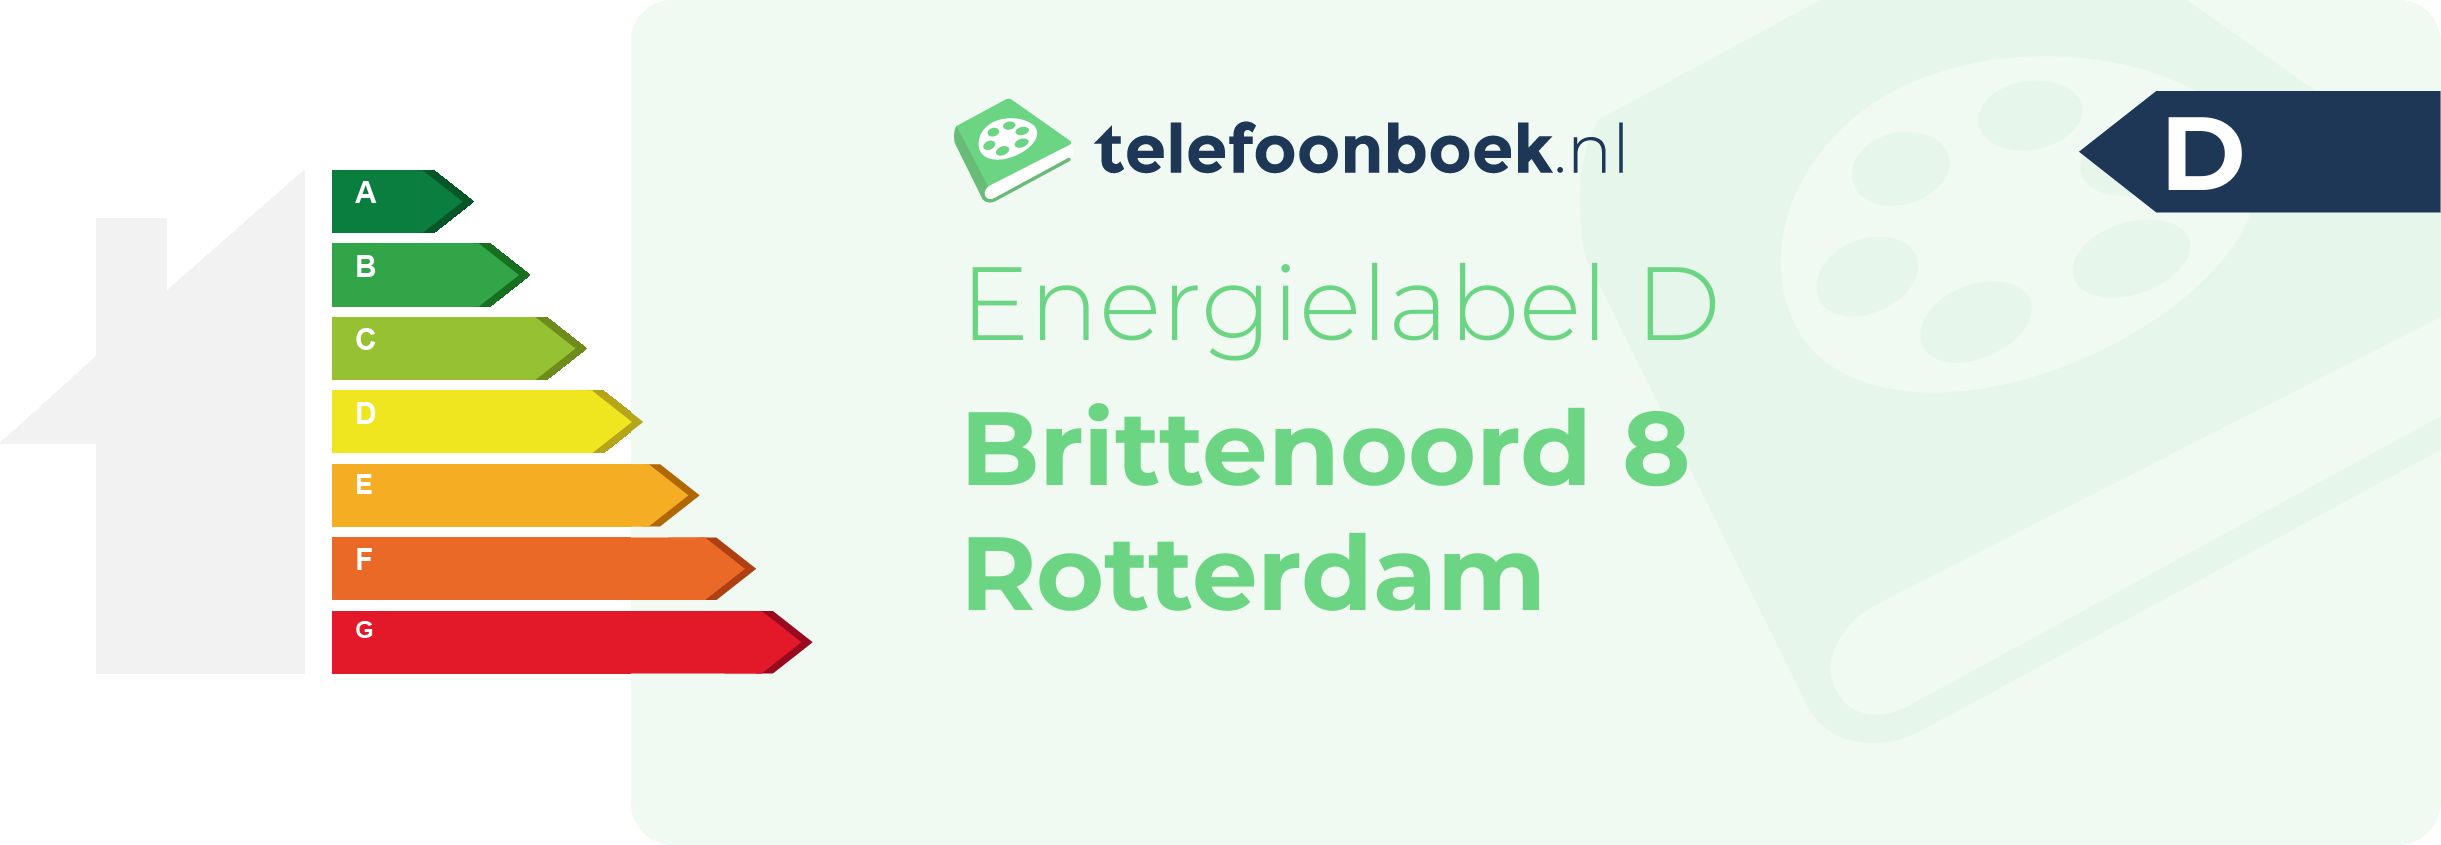 Energielabel Brittenoord 8 Rotterdam